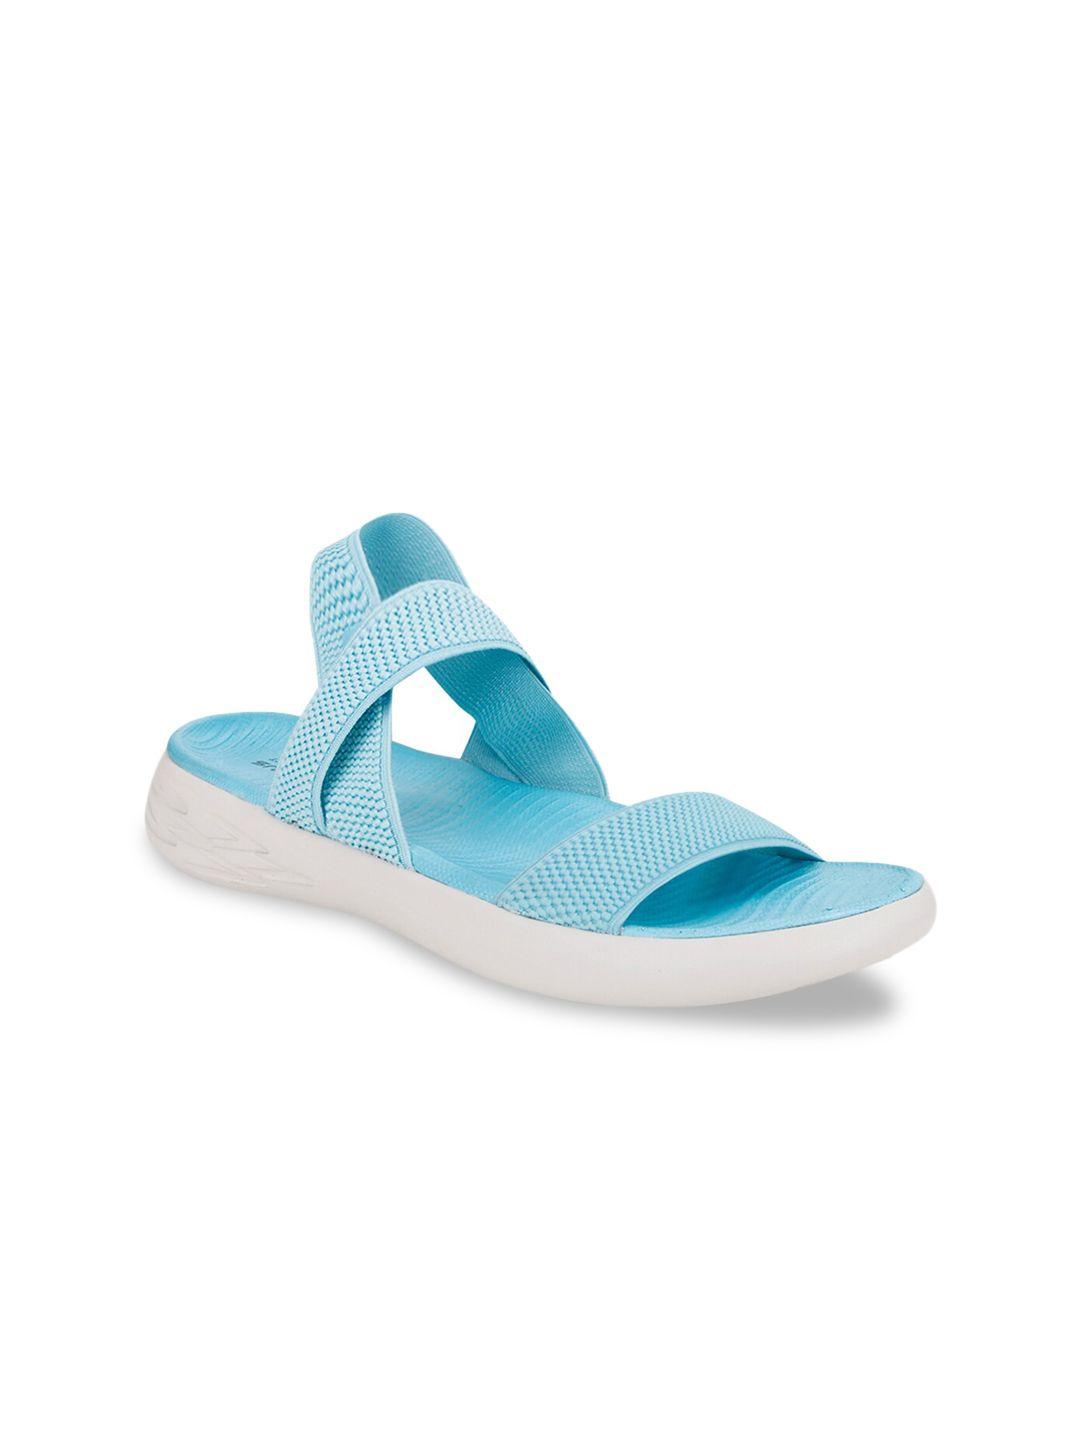 campus women blue & white comfort sandals